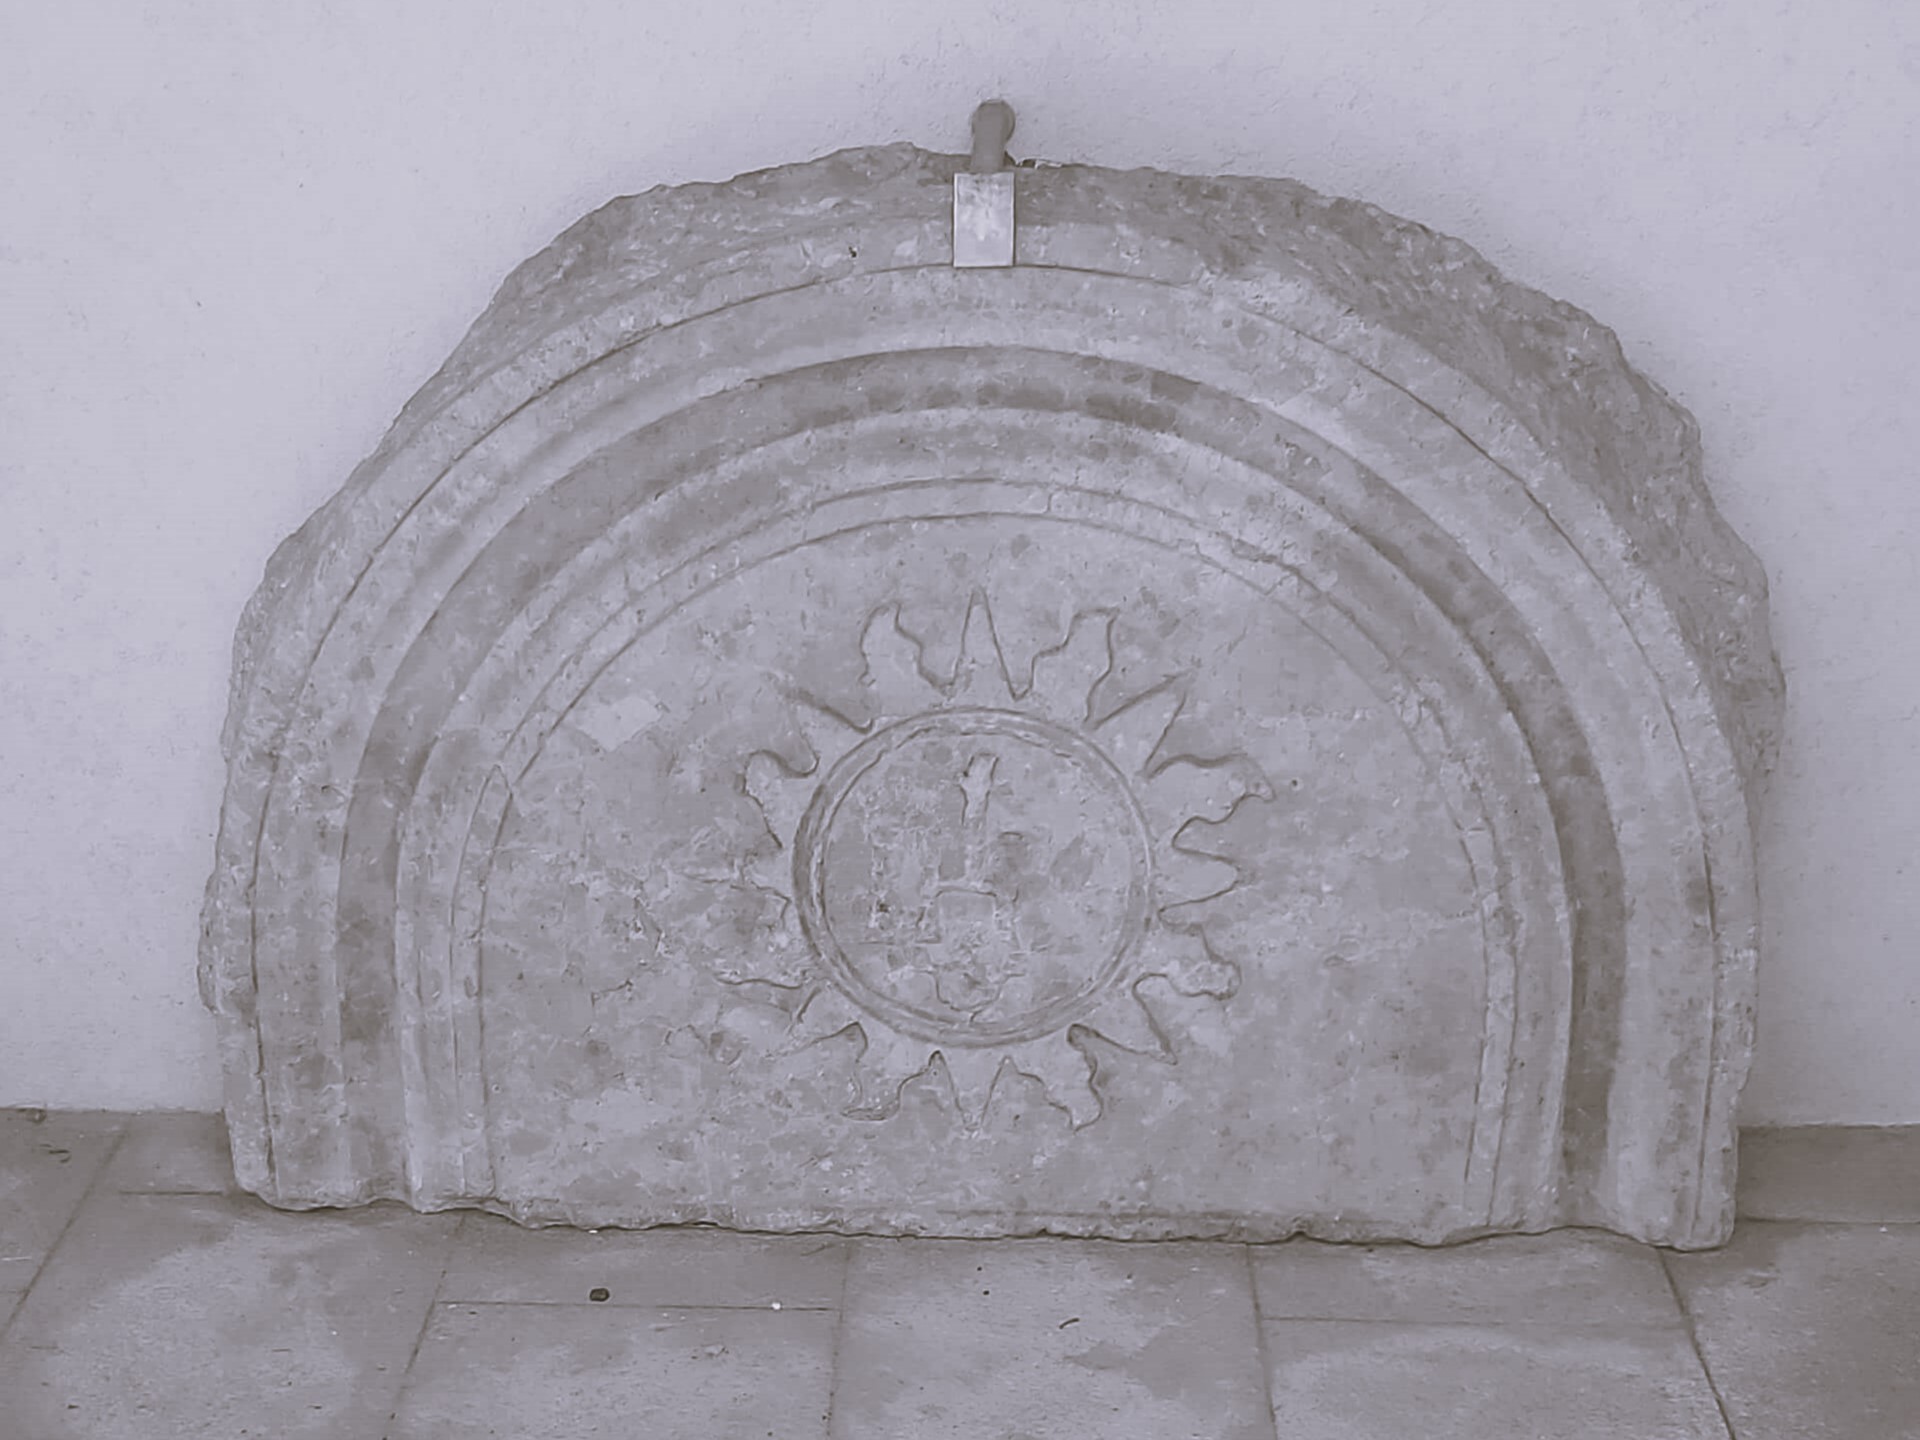 A partial ancient stone slab with a sunburst shape on it. Rijeka, Croatia